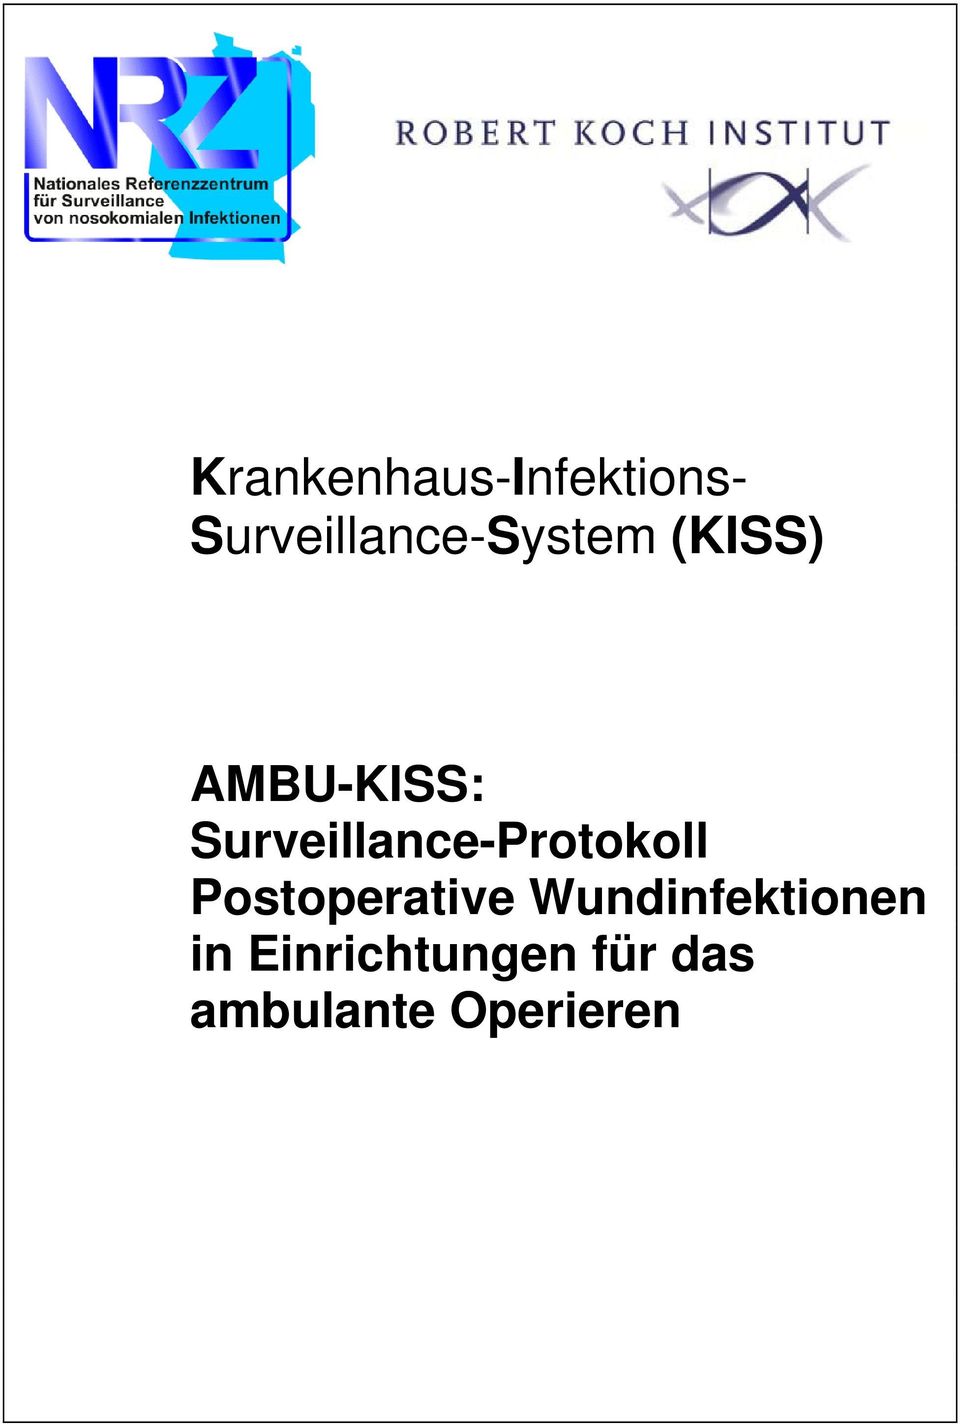 Surveillance-Protokoll Postoperative